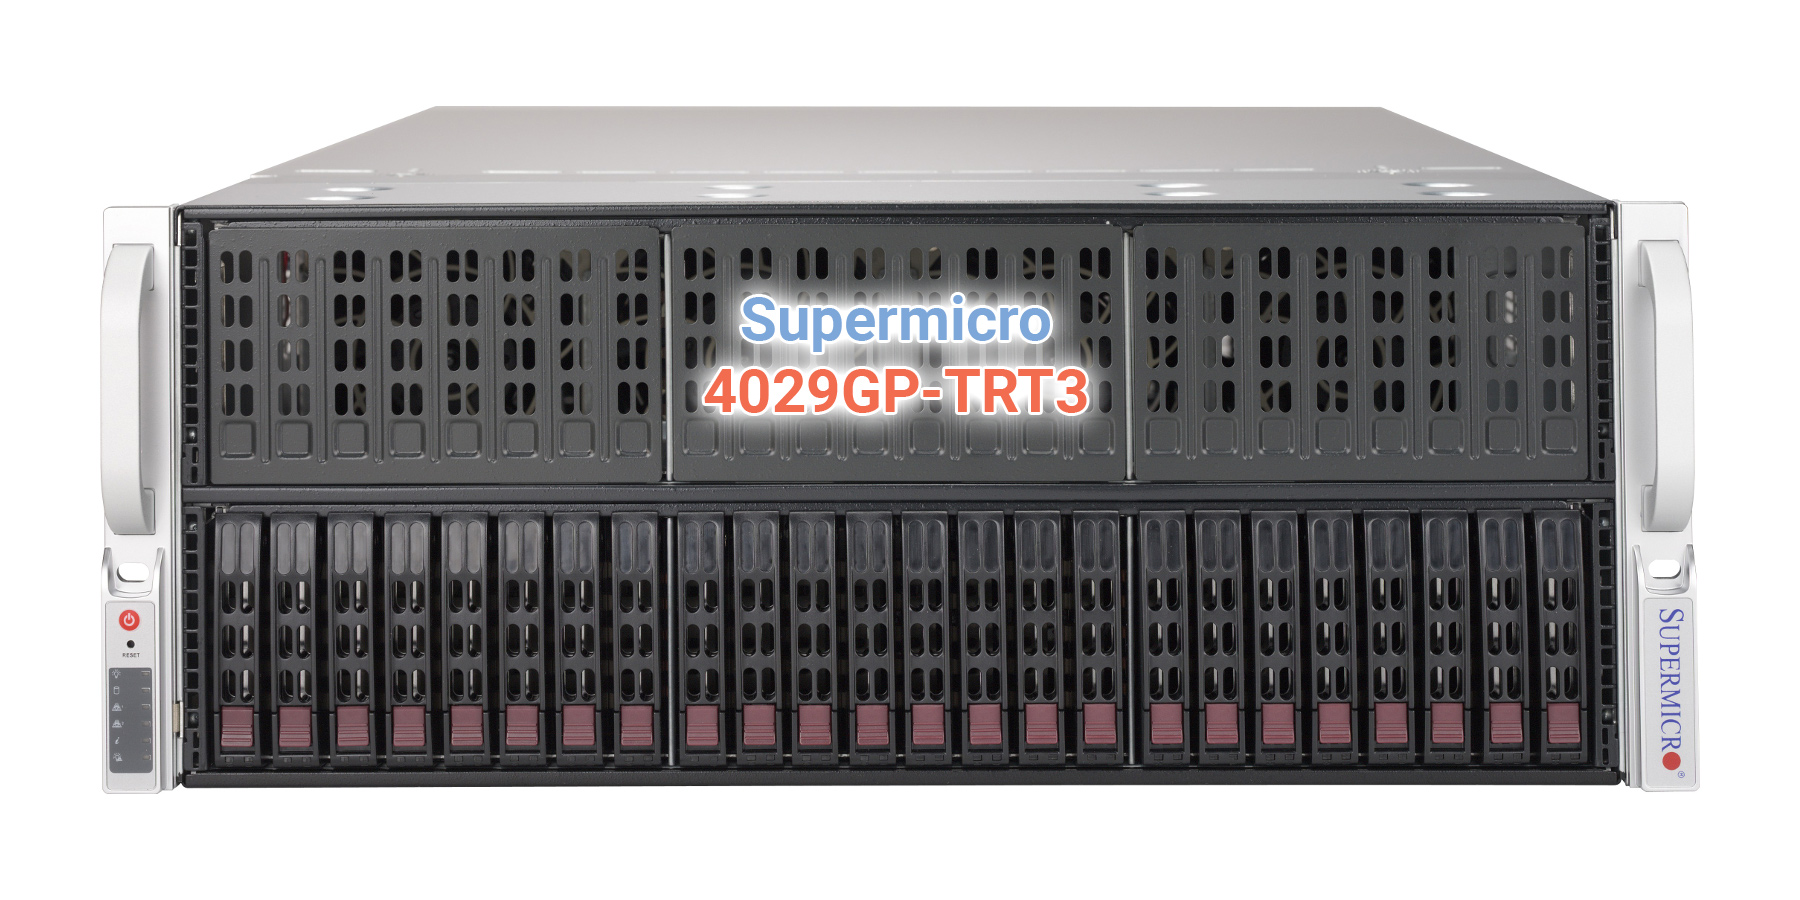 Đánh giá máy chủ GPU Supermicro SuperServer 4029GP-TRT3